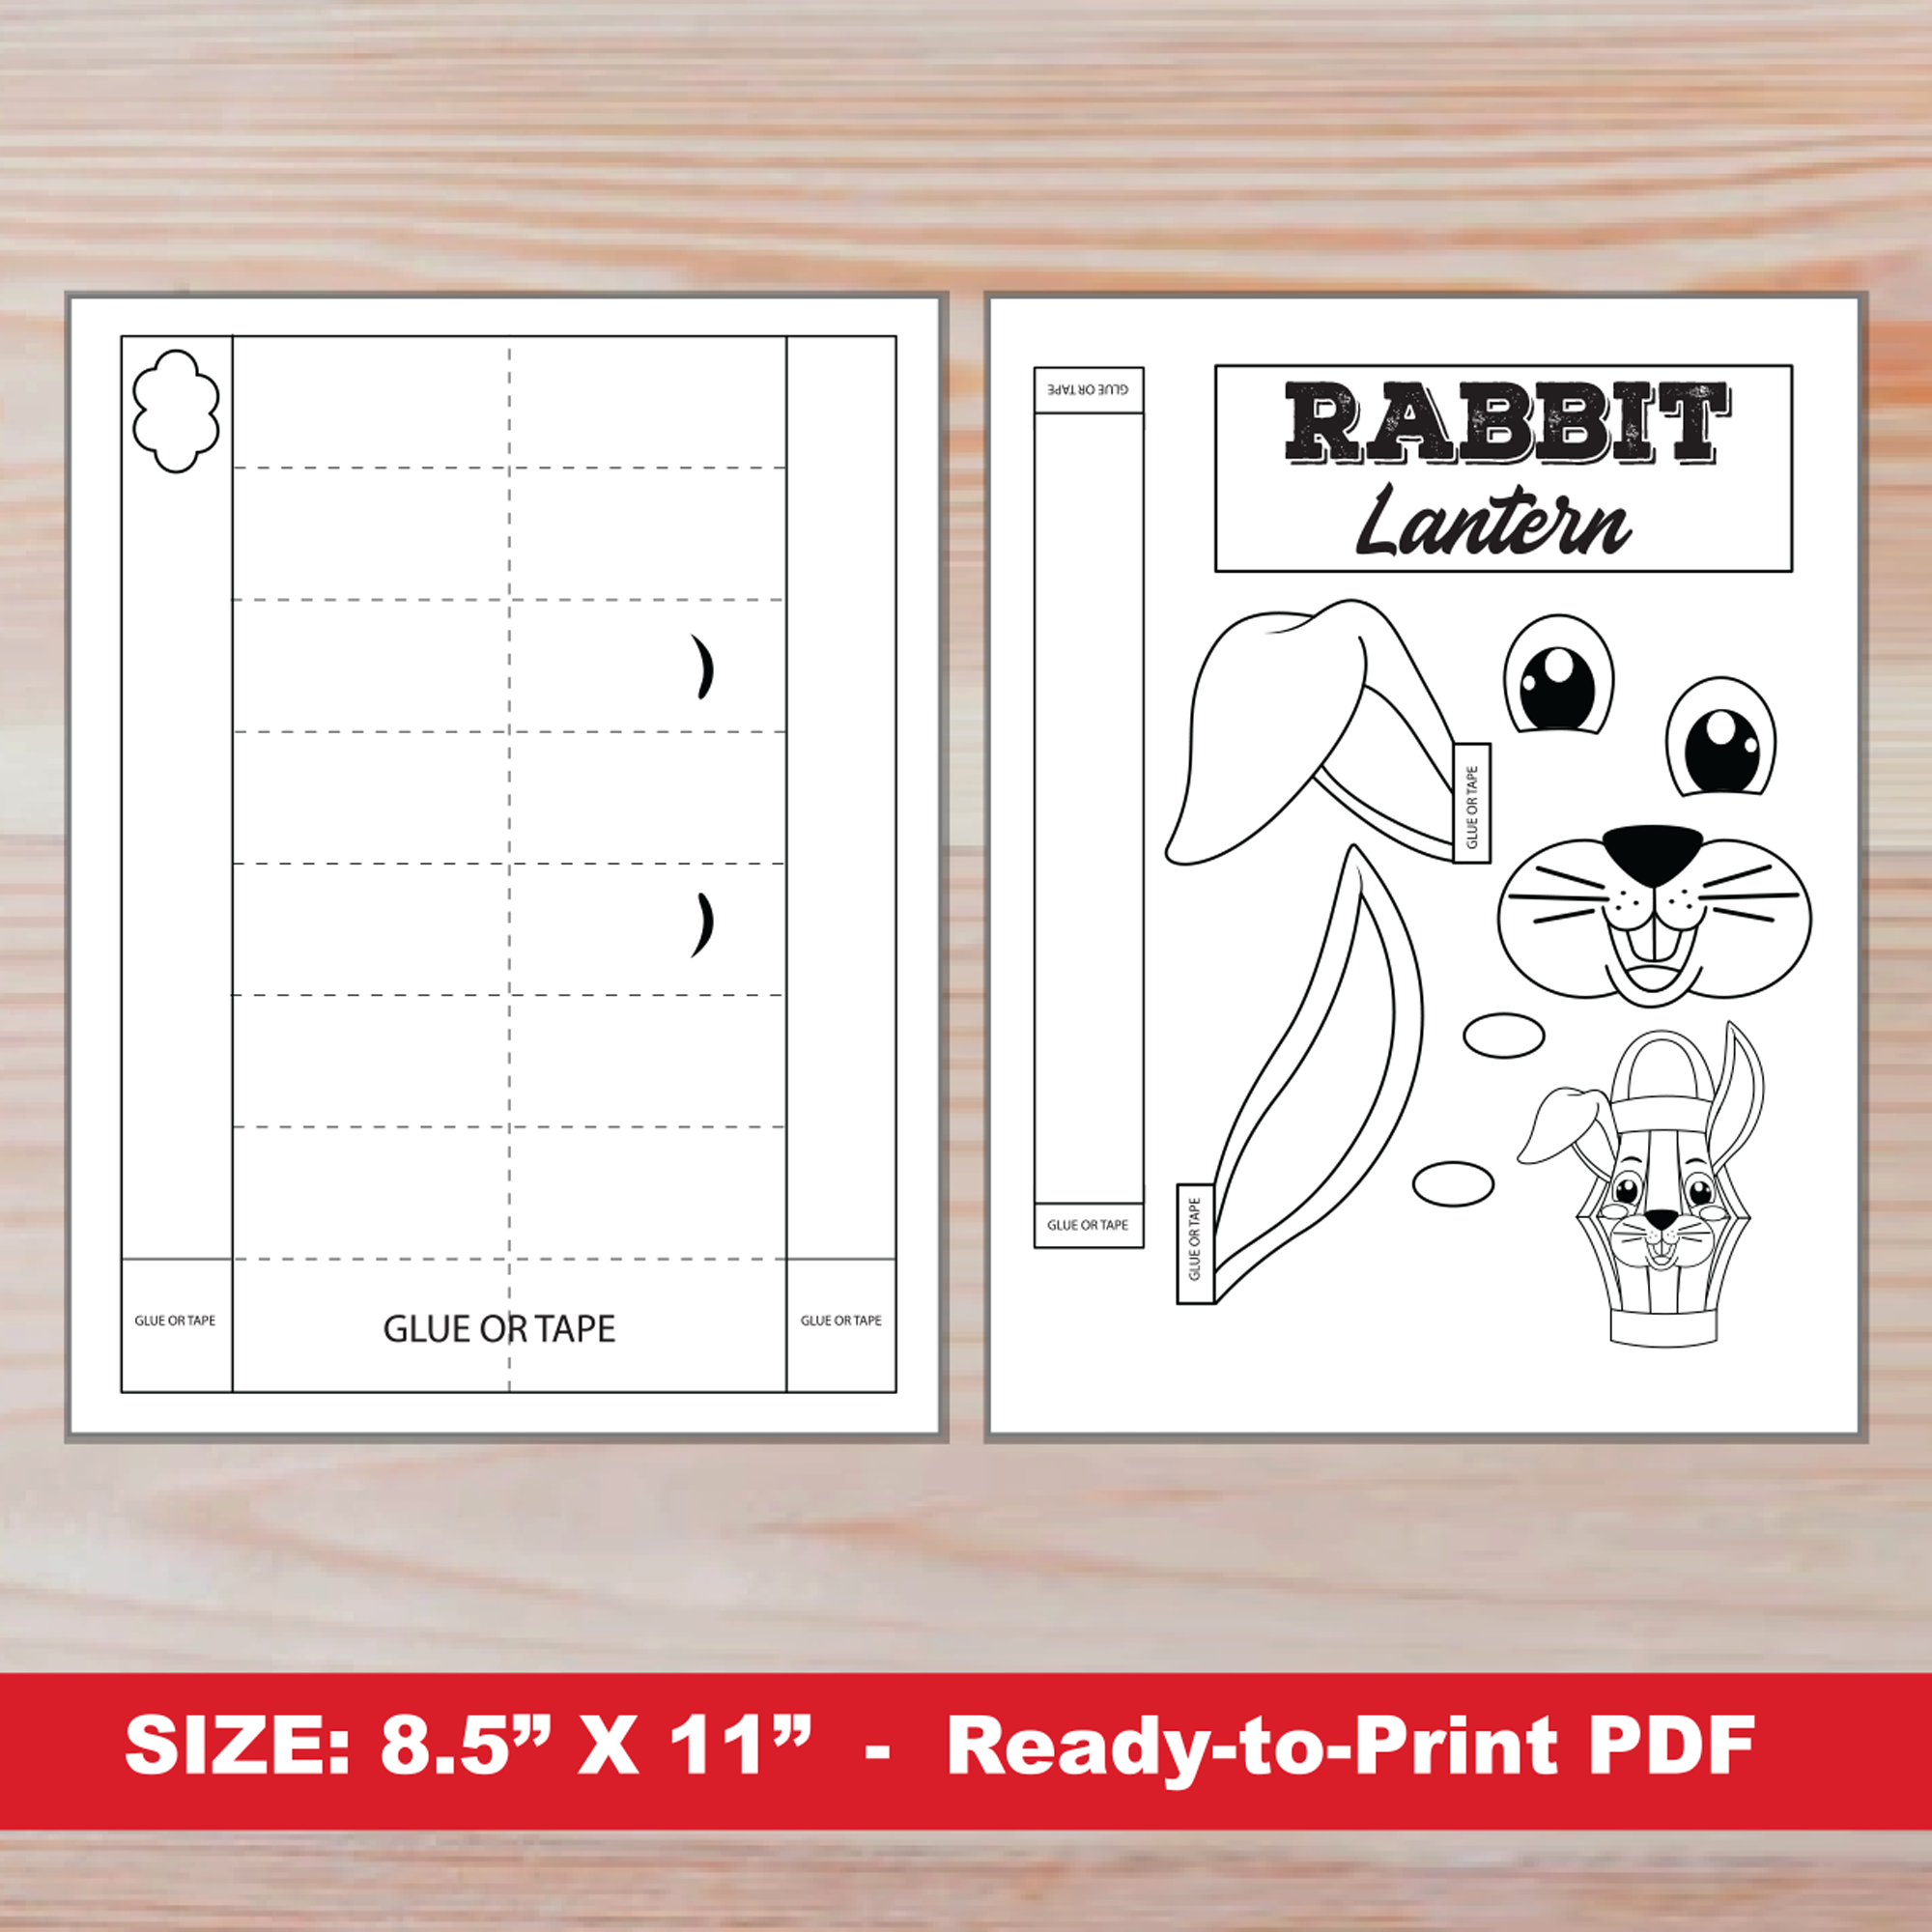 Rabbit Lantern Template Free Printable